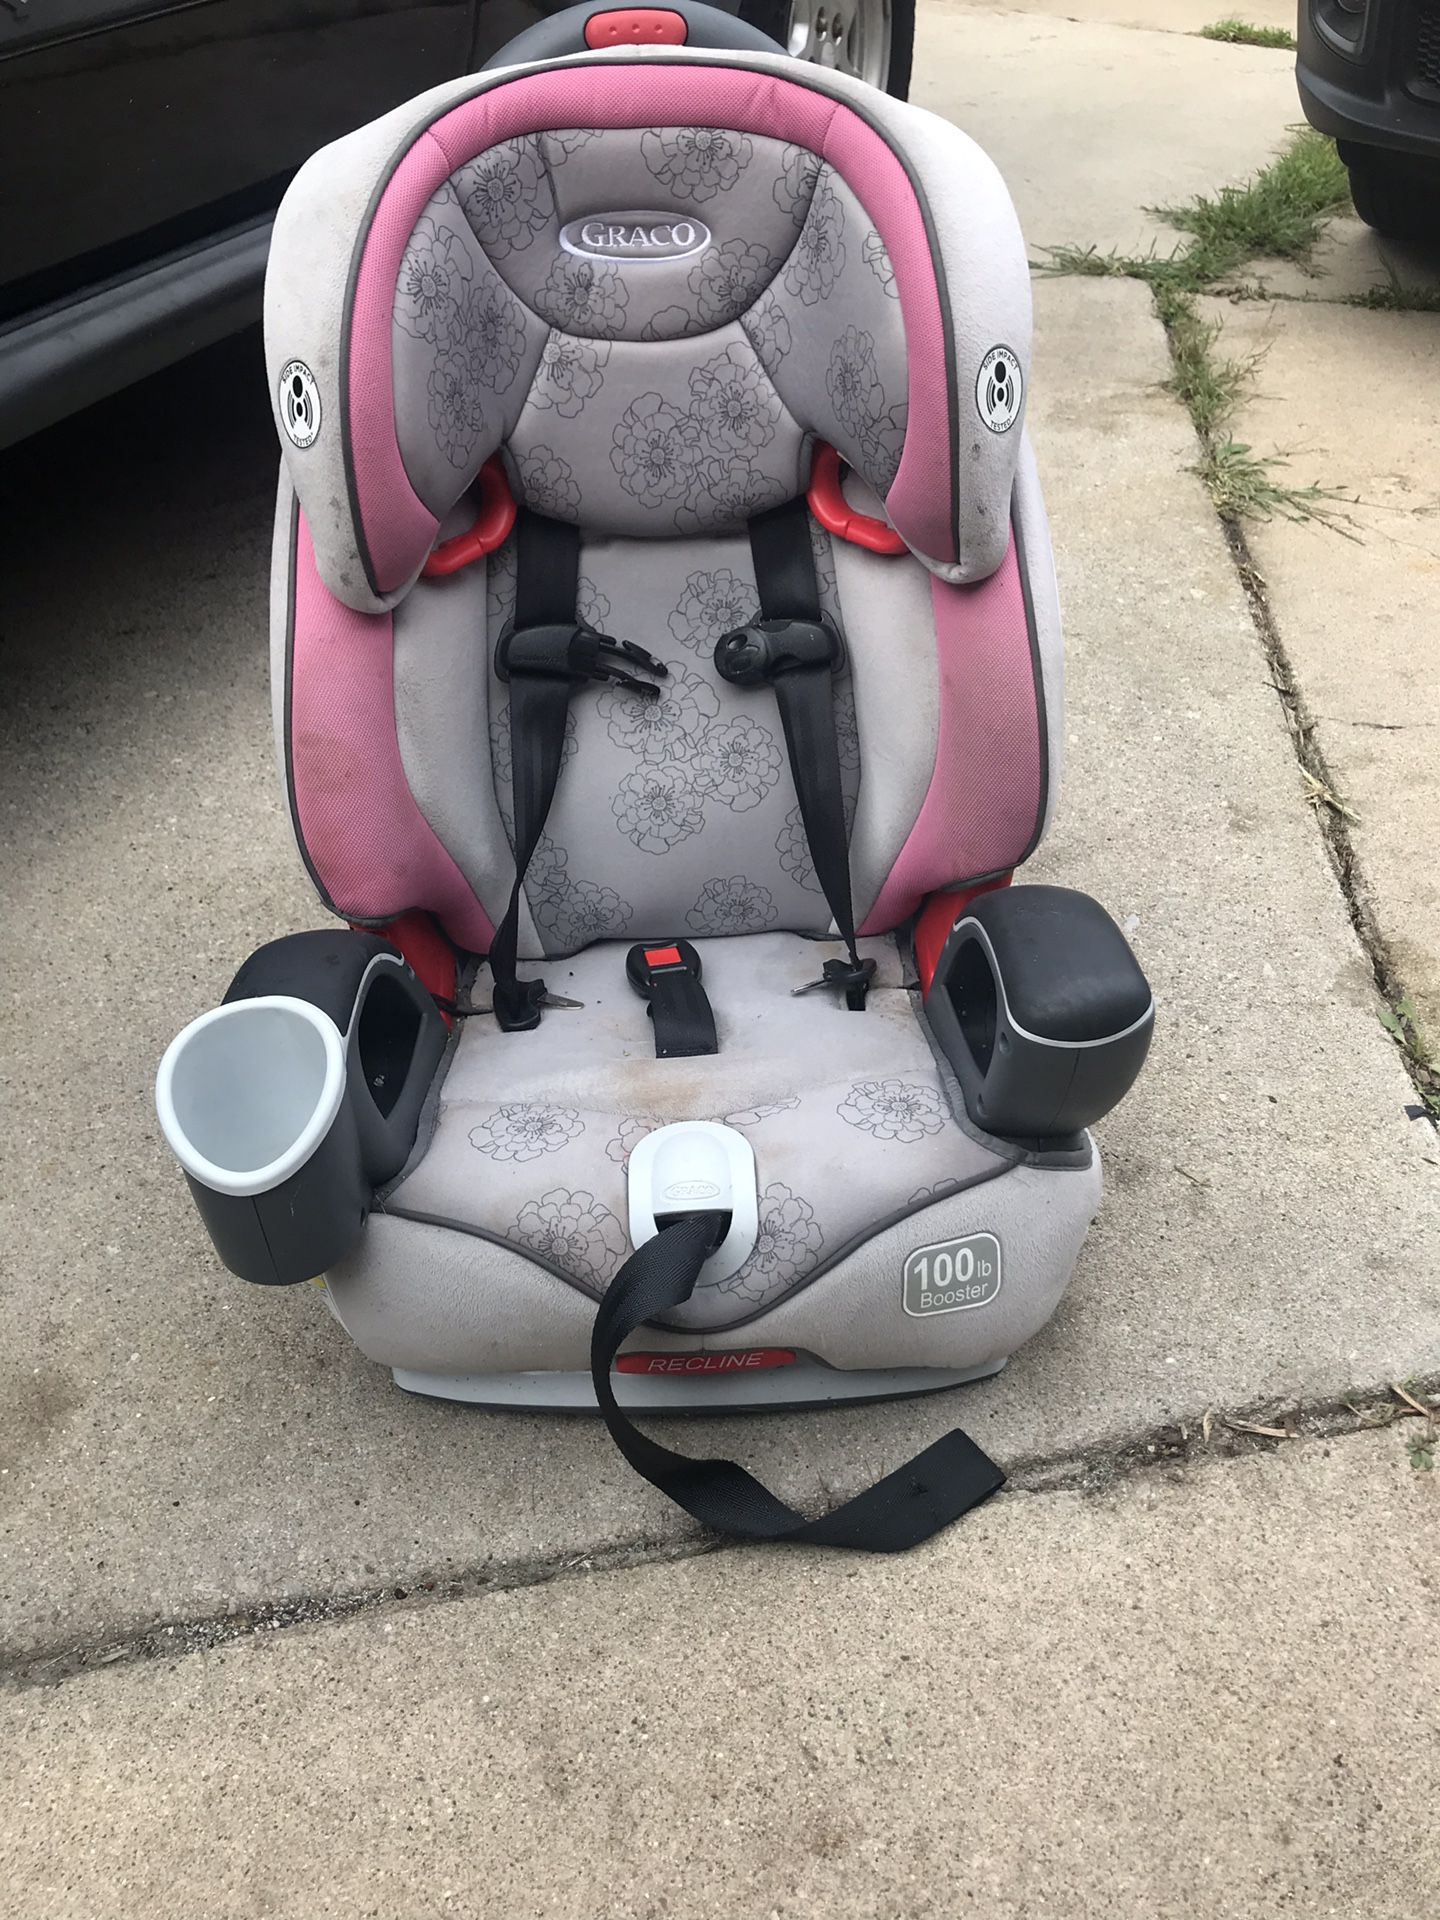 Grace car seat